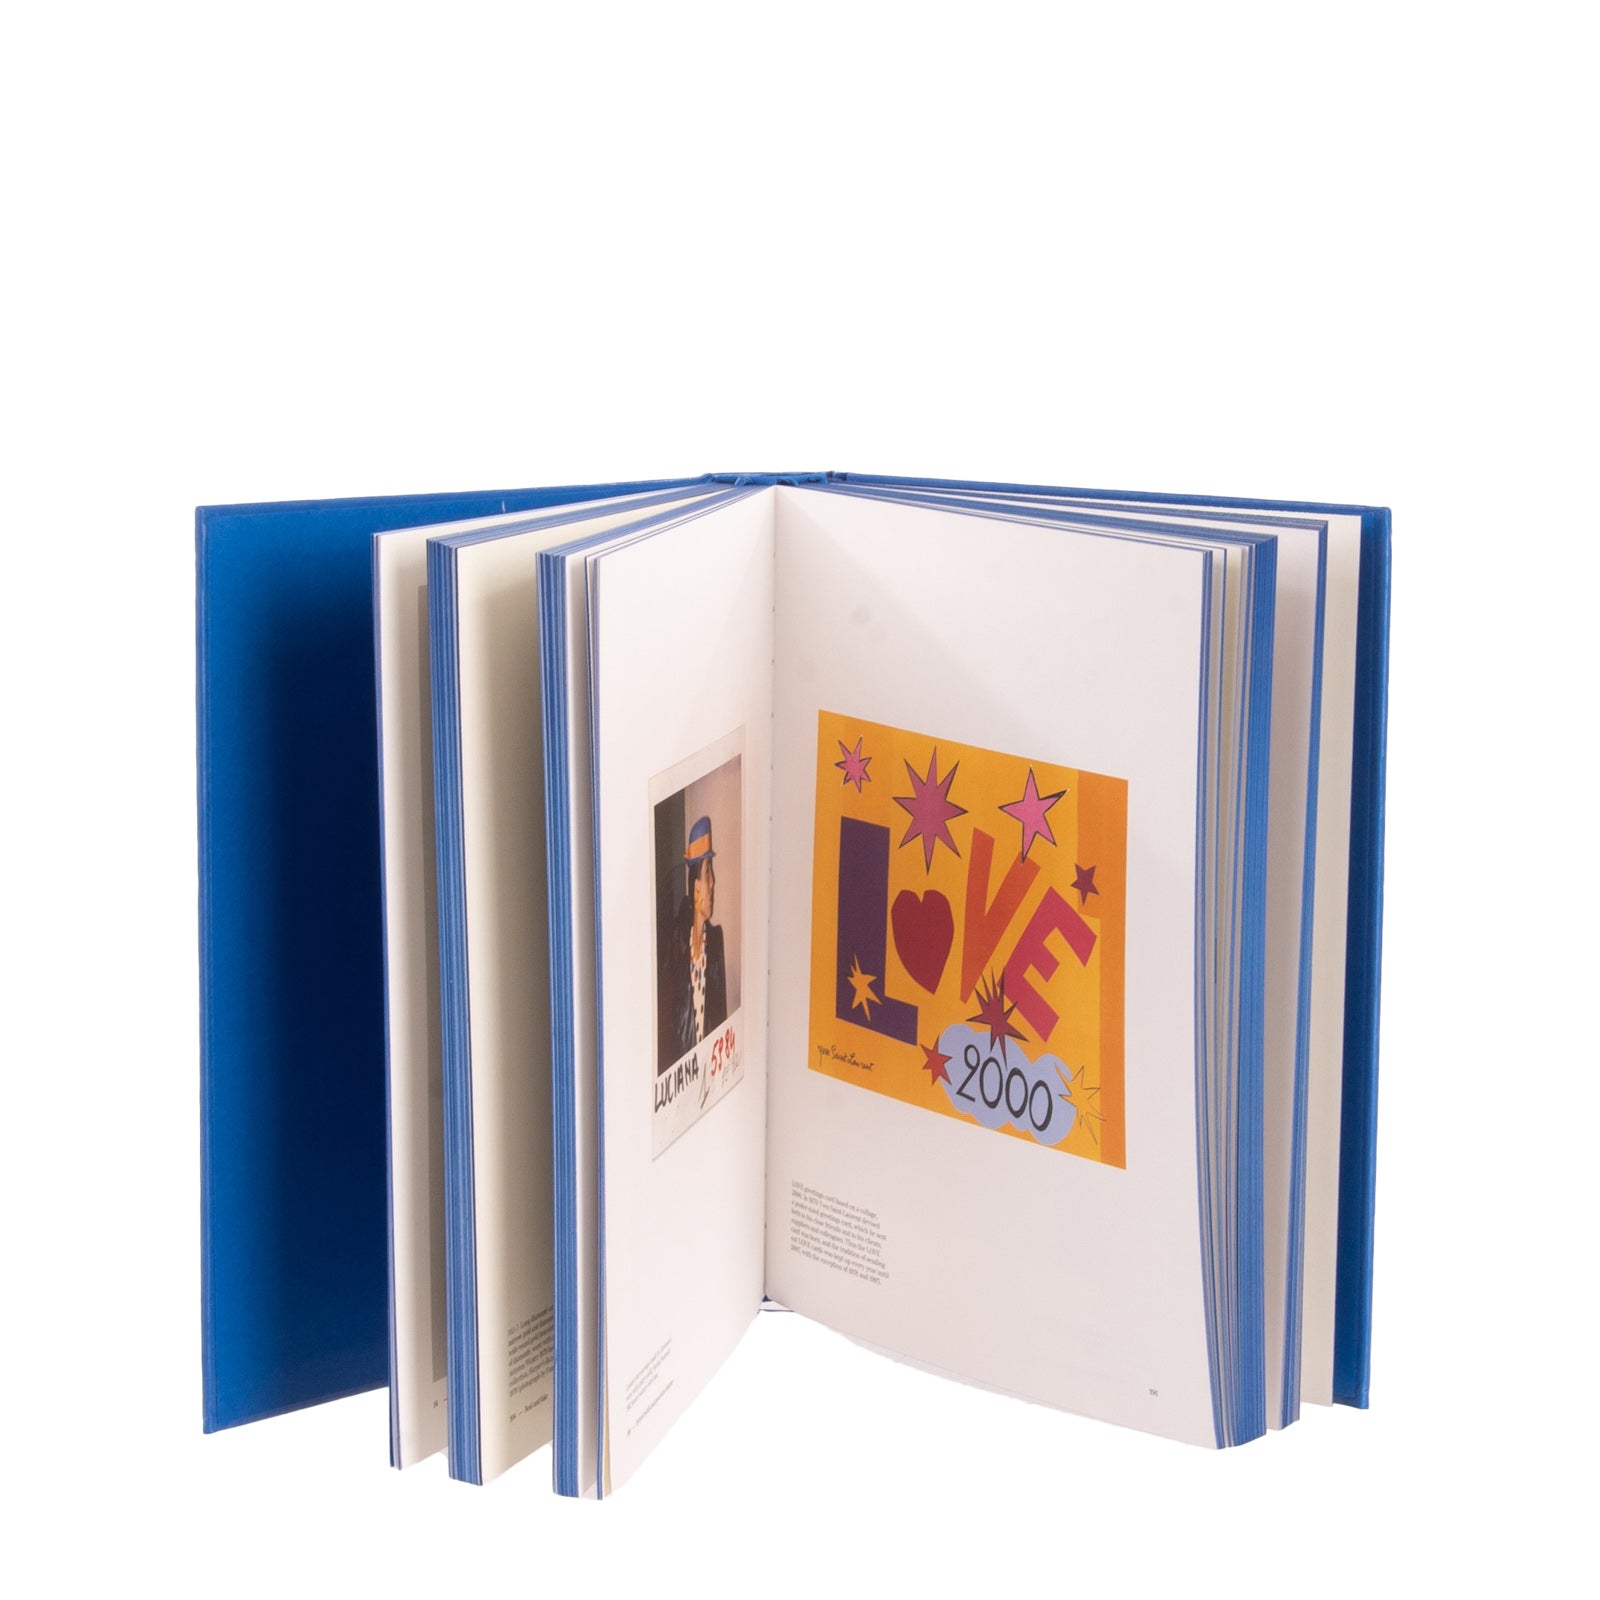 Sporvogn Brandmand Sved Yves Saint Laurent Accessories Book By Patrick Mauries PHAIDON BOOK –POPPRI  Online Fashion Auctions